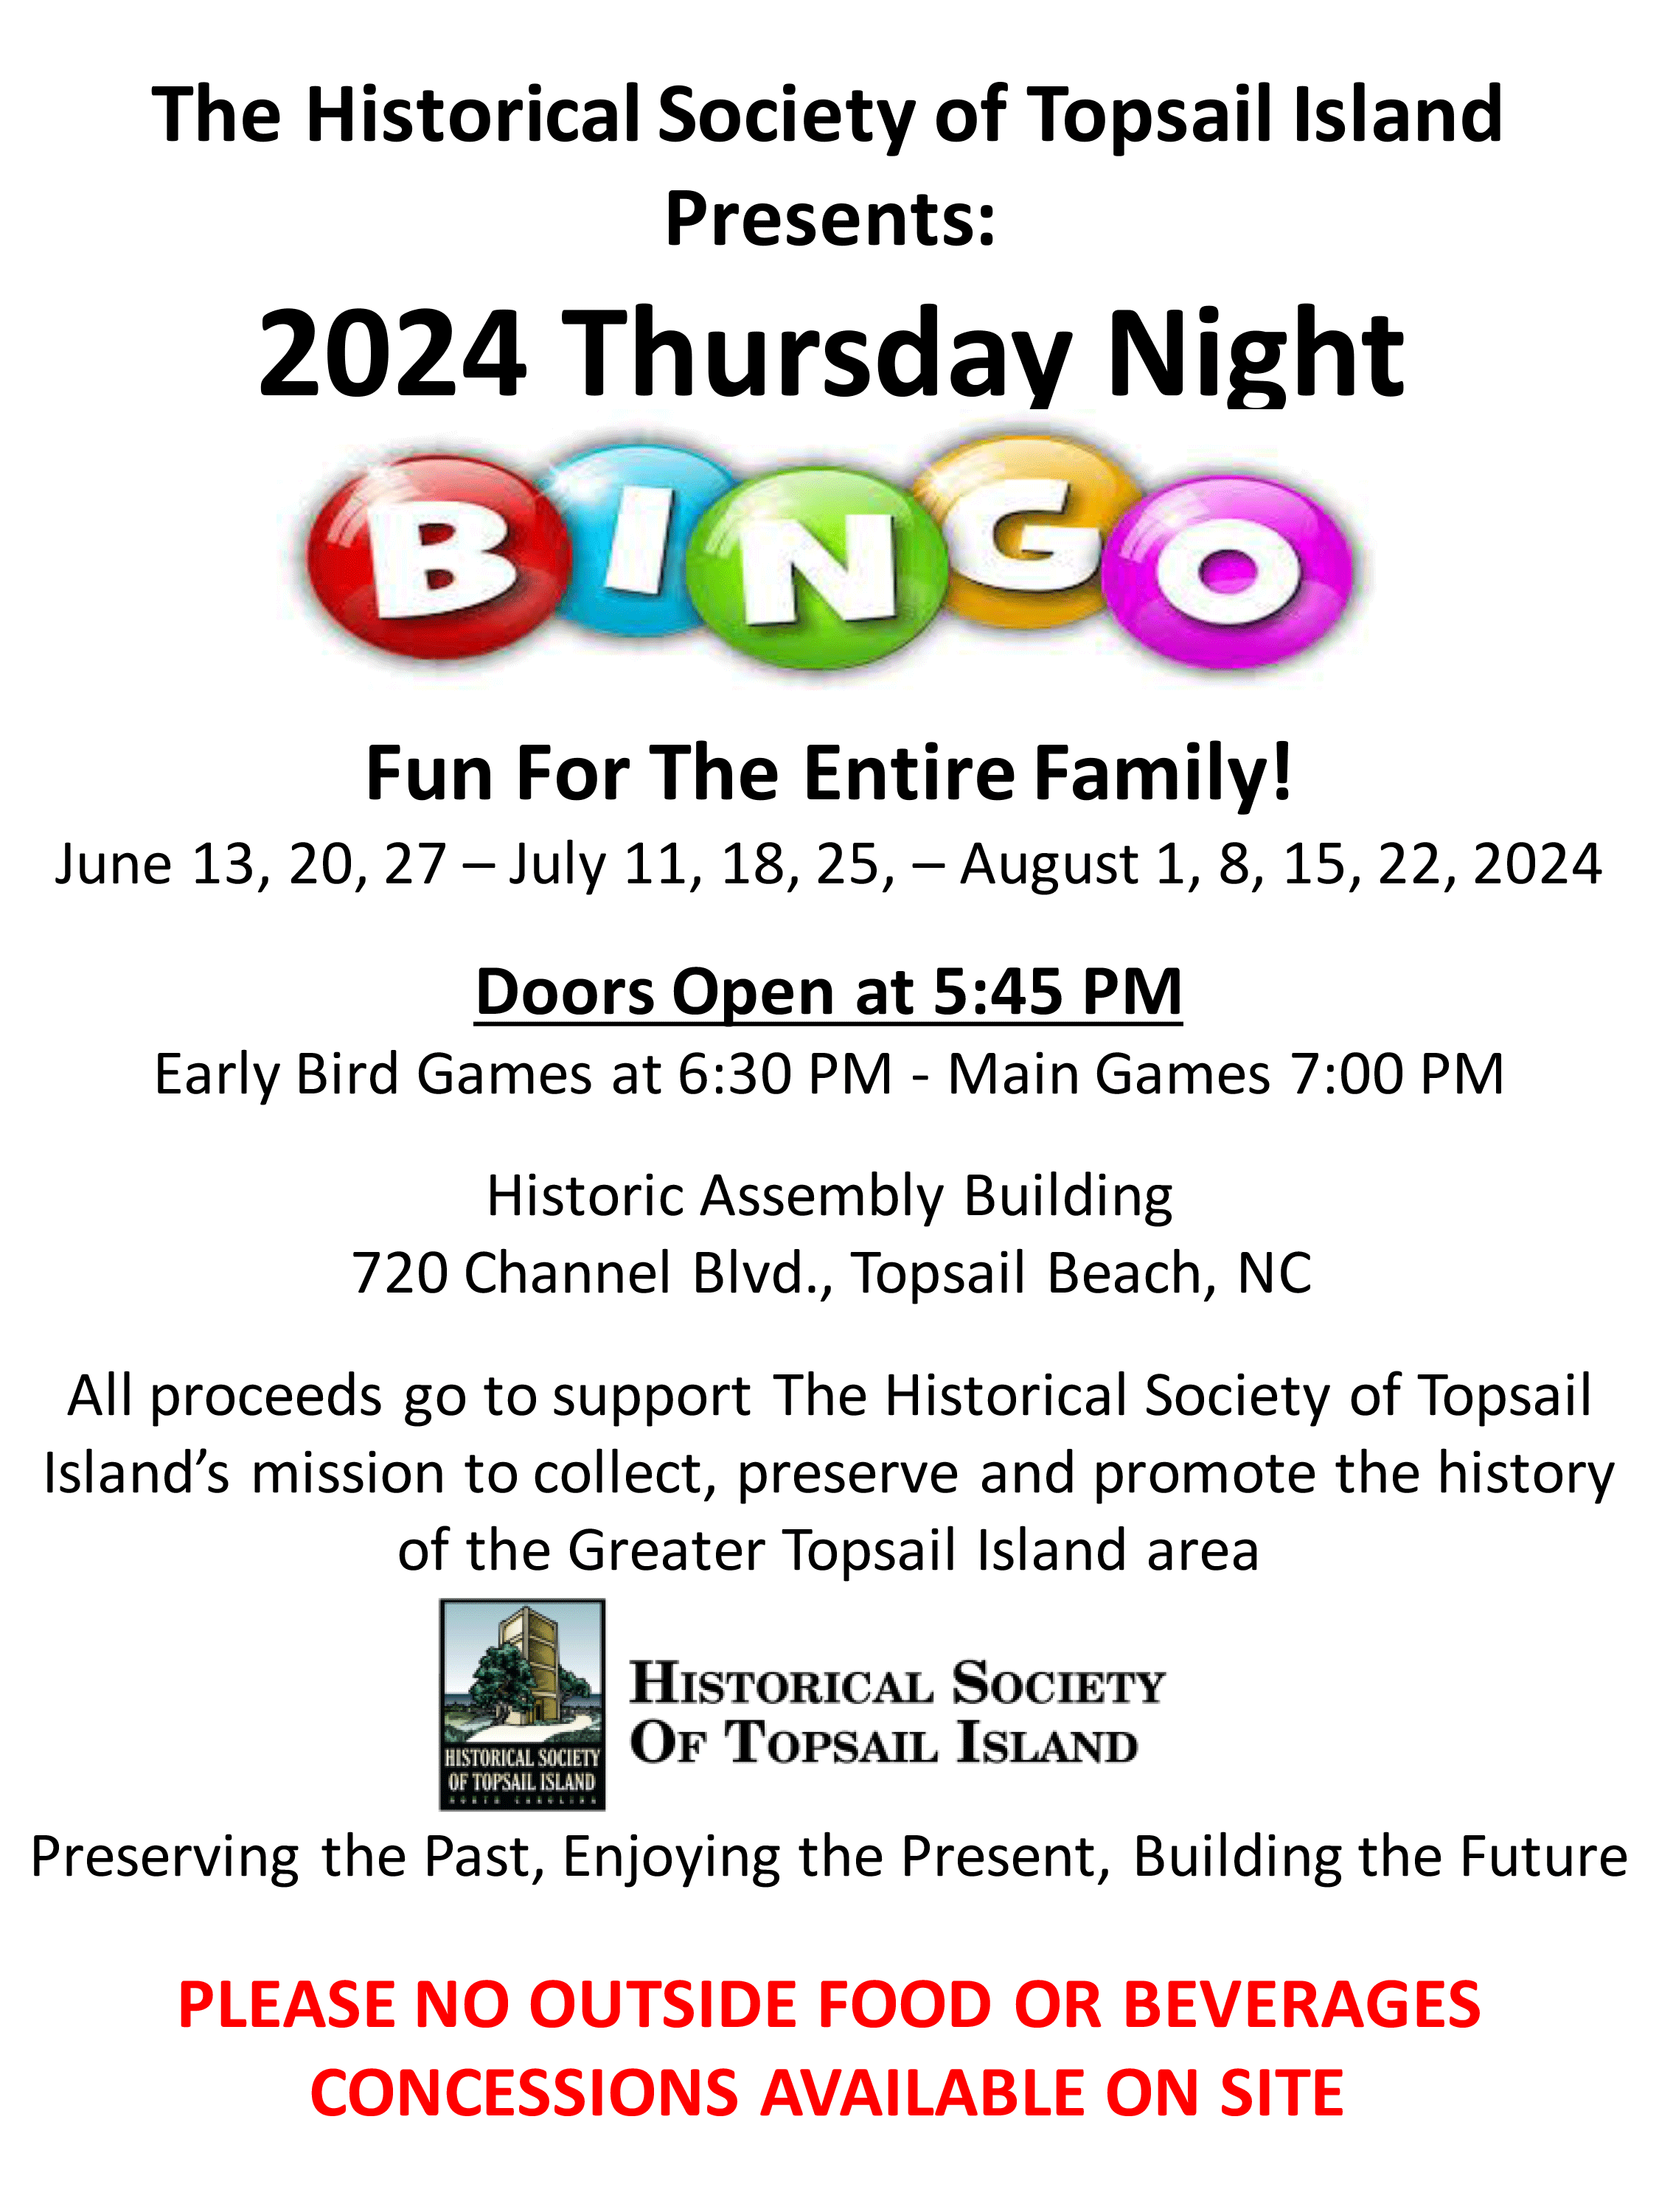 Topsail Historical Society of Topsail Island presents 2024 Thursday Night Bingo